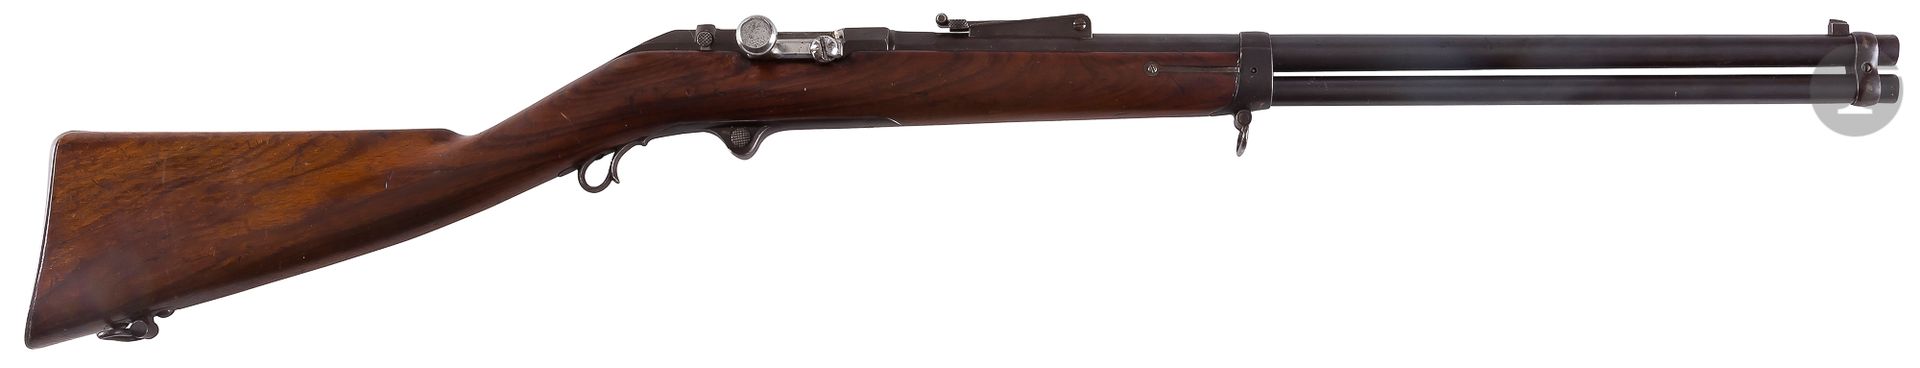 Null Raro rifle con sistema "Pieri" 1886, con cerrojo, un golpe, calibre 11 mm

&hellip;